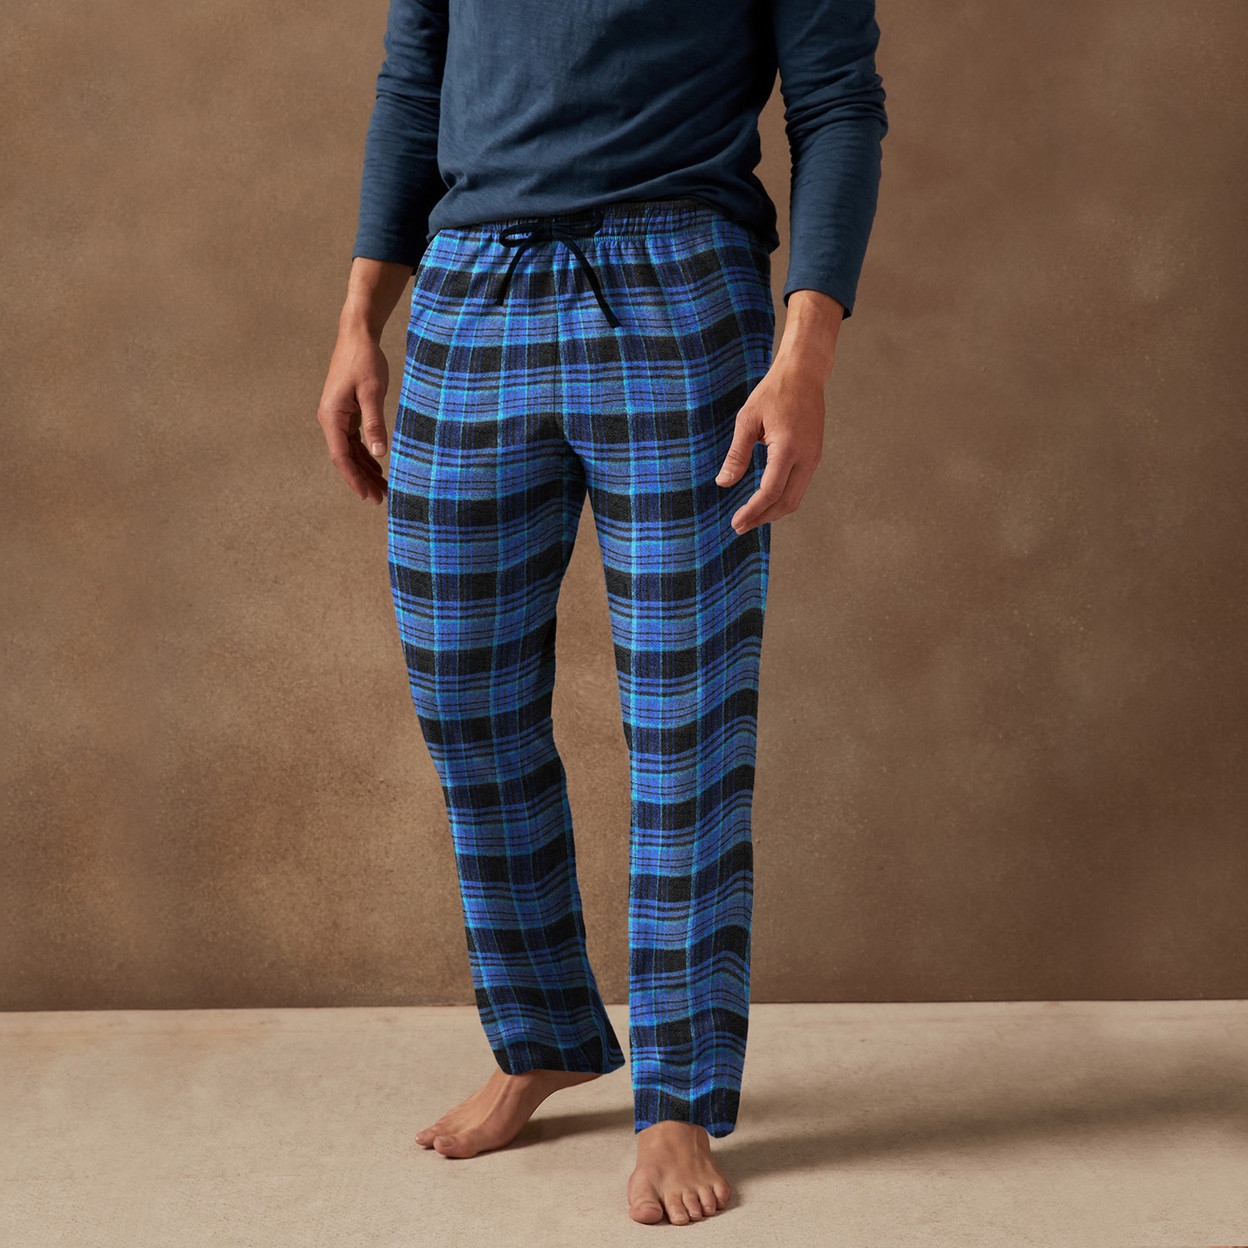 Men's Ultra-Soft Cozy Flannel Fleece Plaid Pajama Sleep Bottom Lounge Pants - Black, X-large